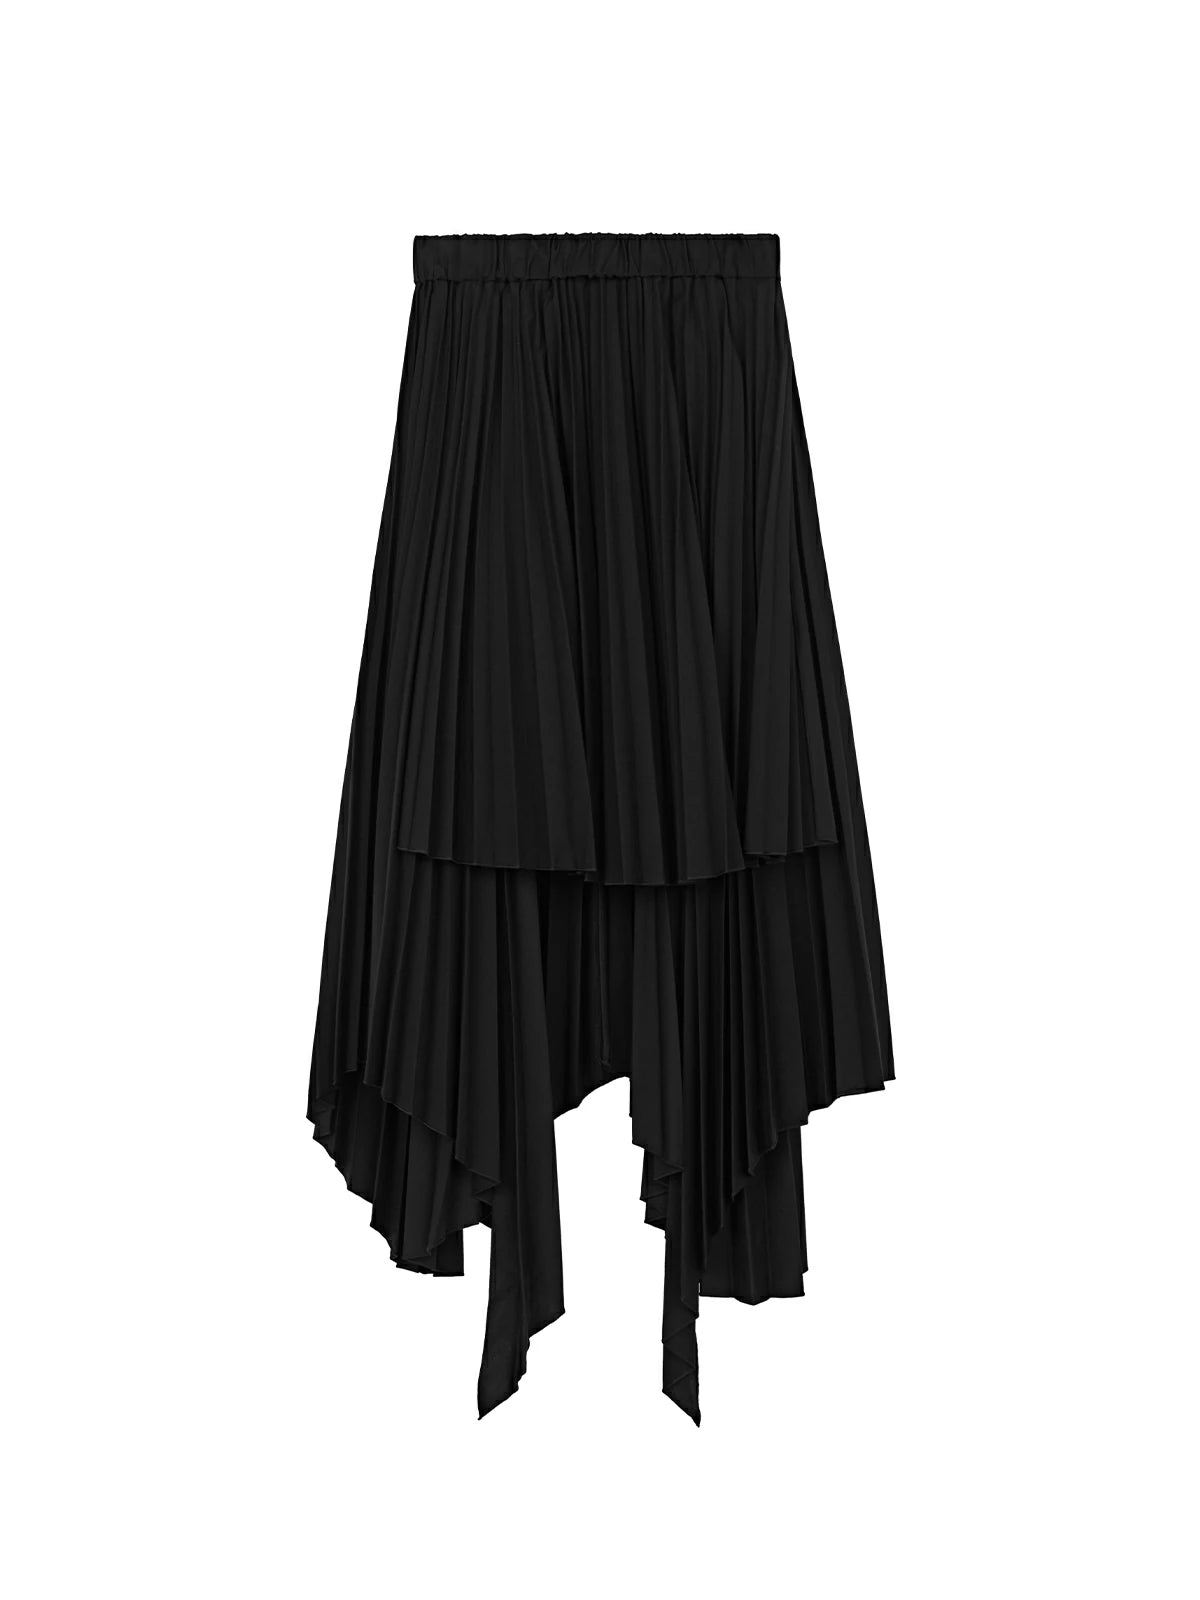 Irregular layered Pleats Skirt